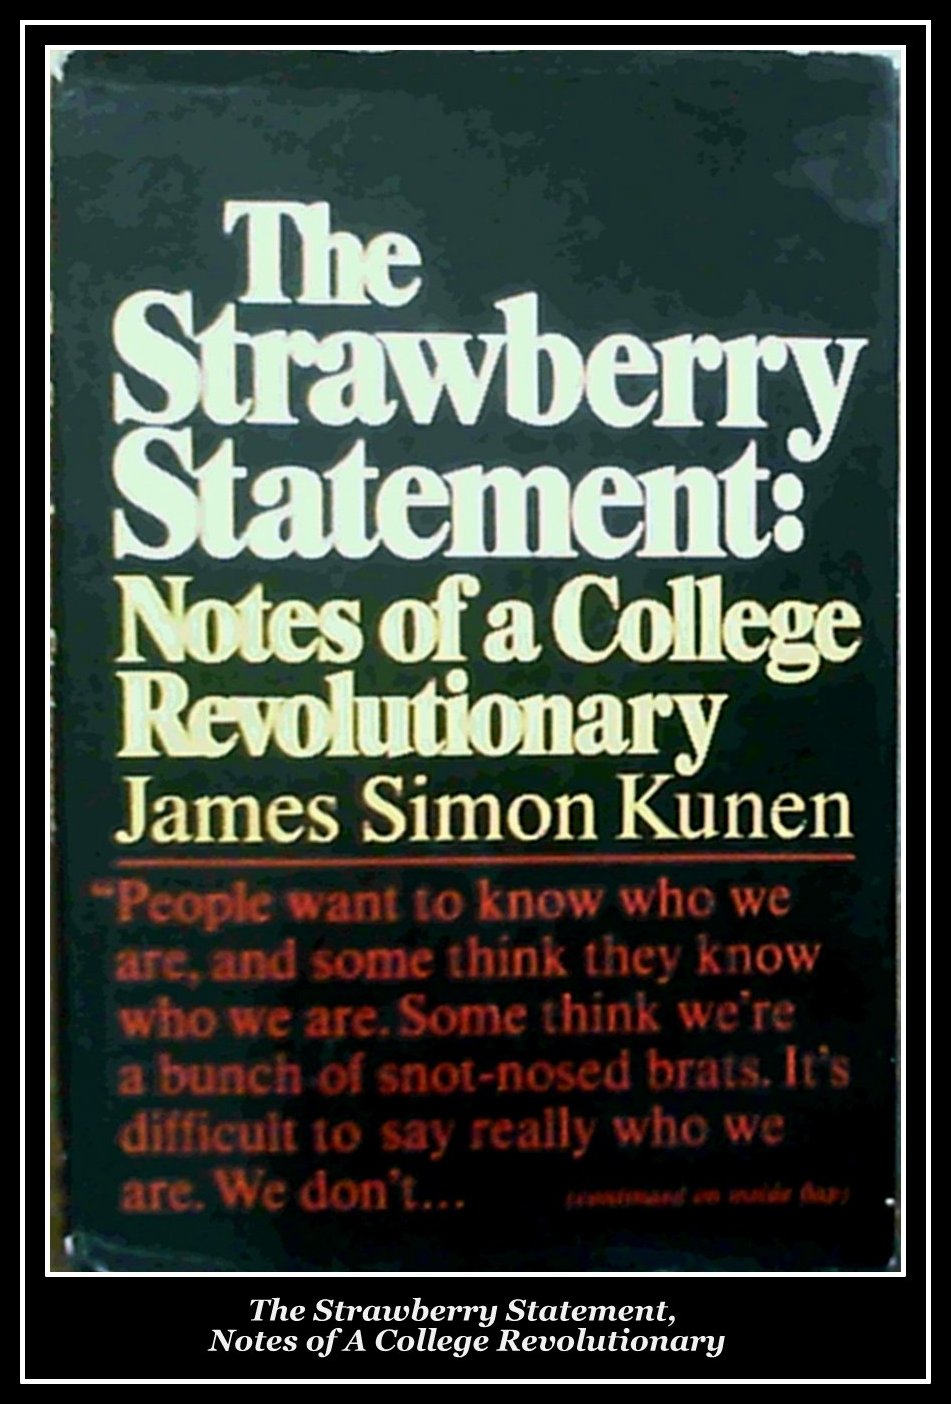 The Strawberry Statement by James Simon Kunen